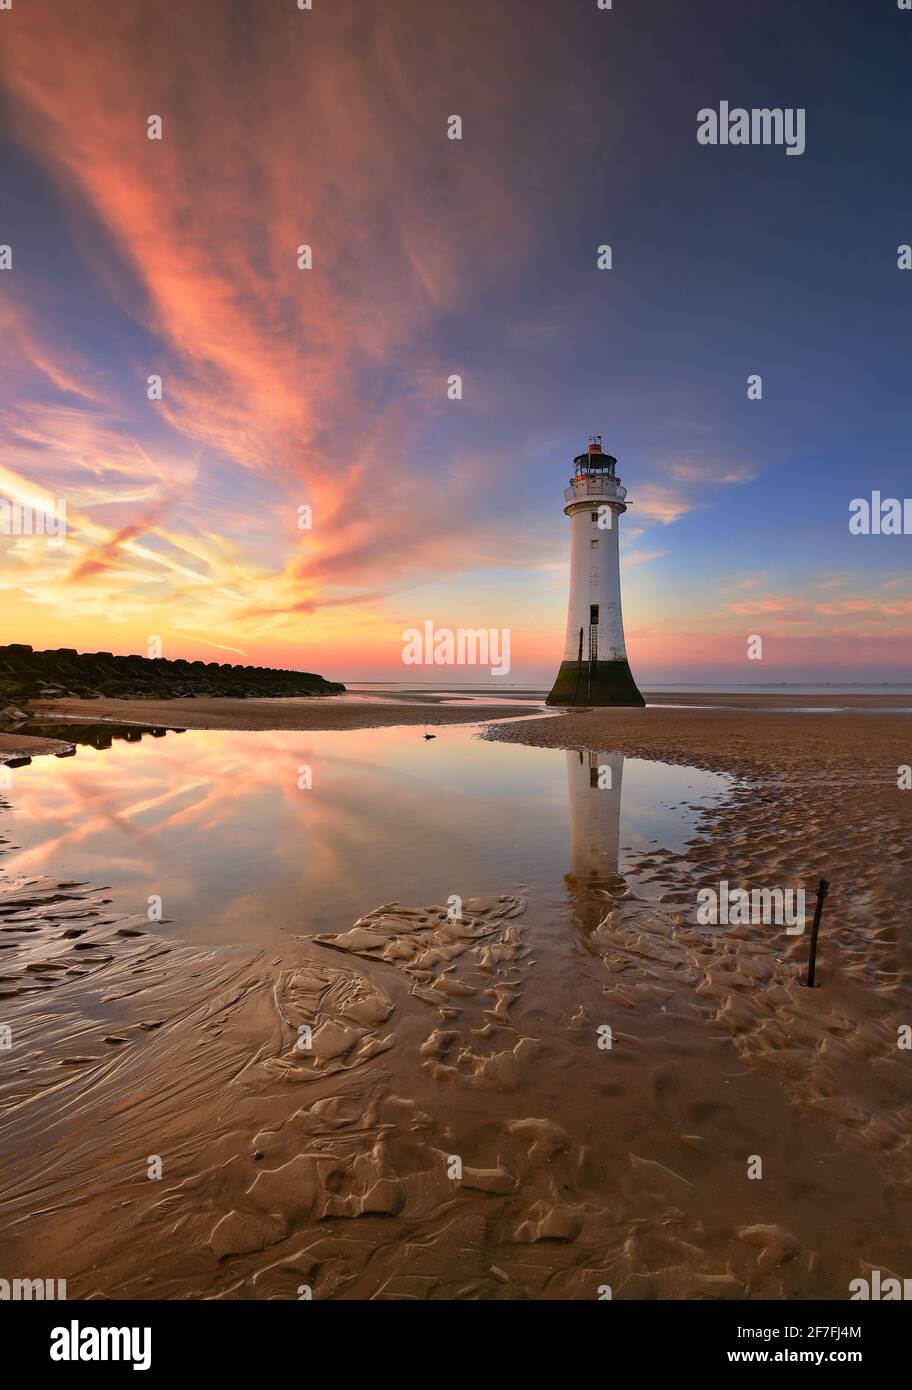 Perch Rock Lighthouse reflected at sunset, New Brighton, Cheshire, England, United Kingdom, Europe Stock Photo